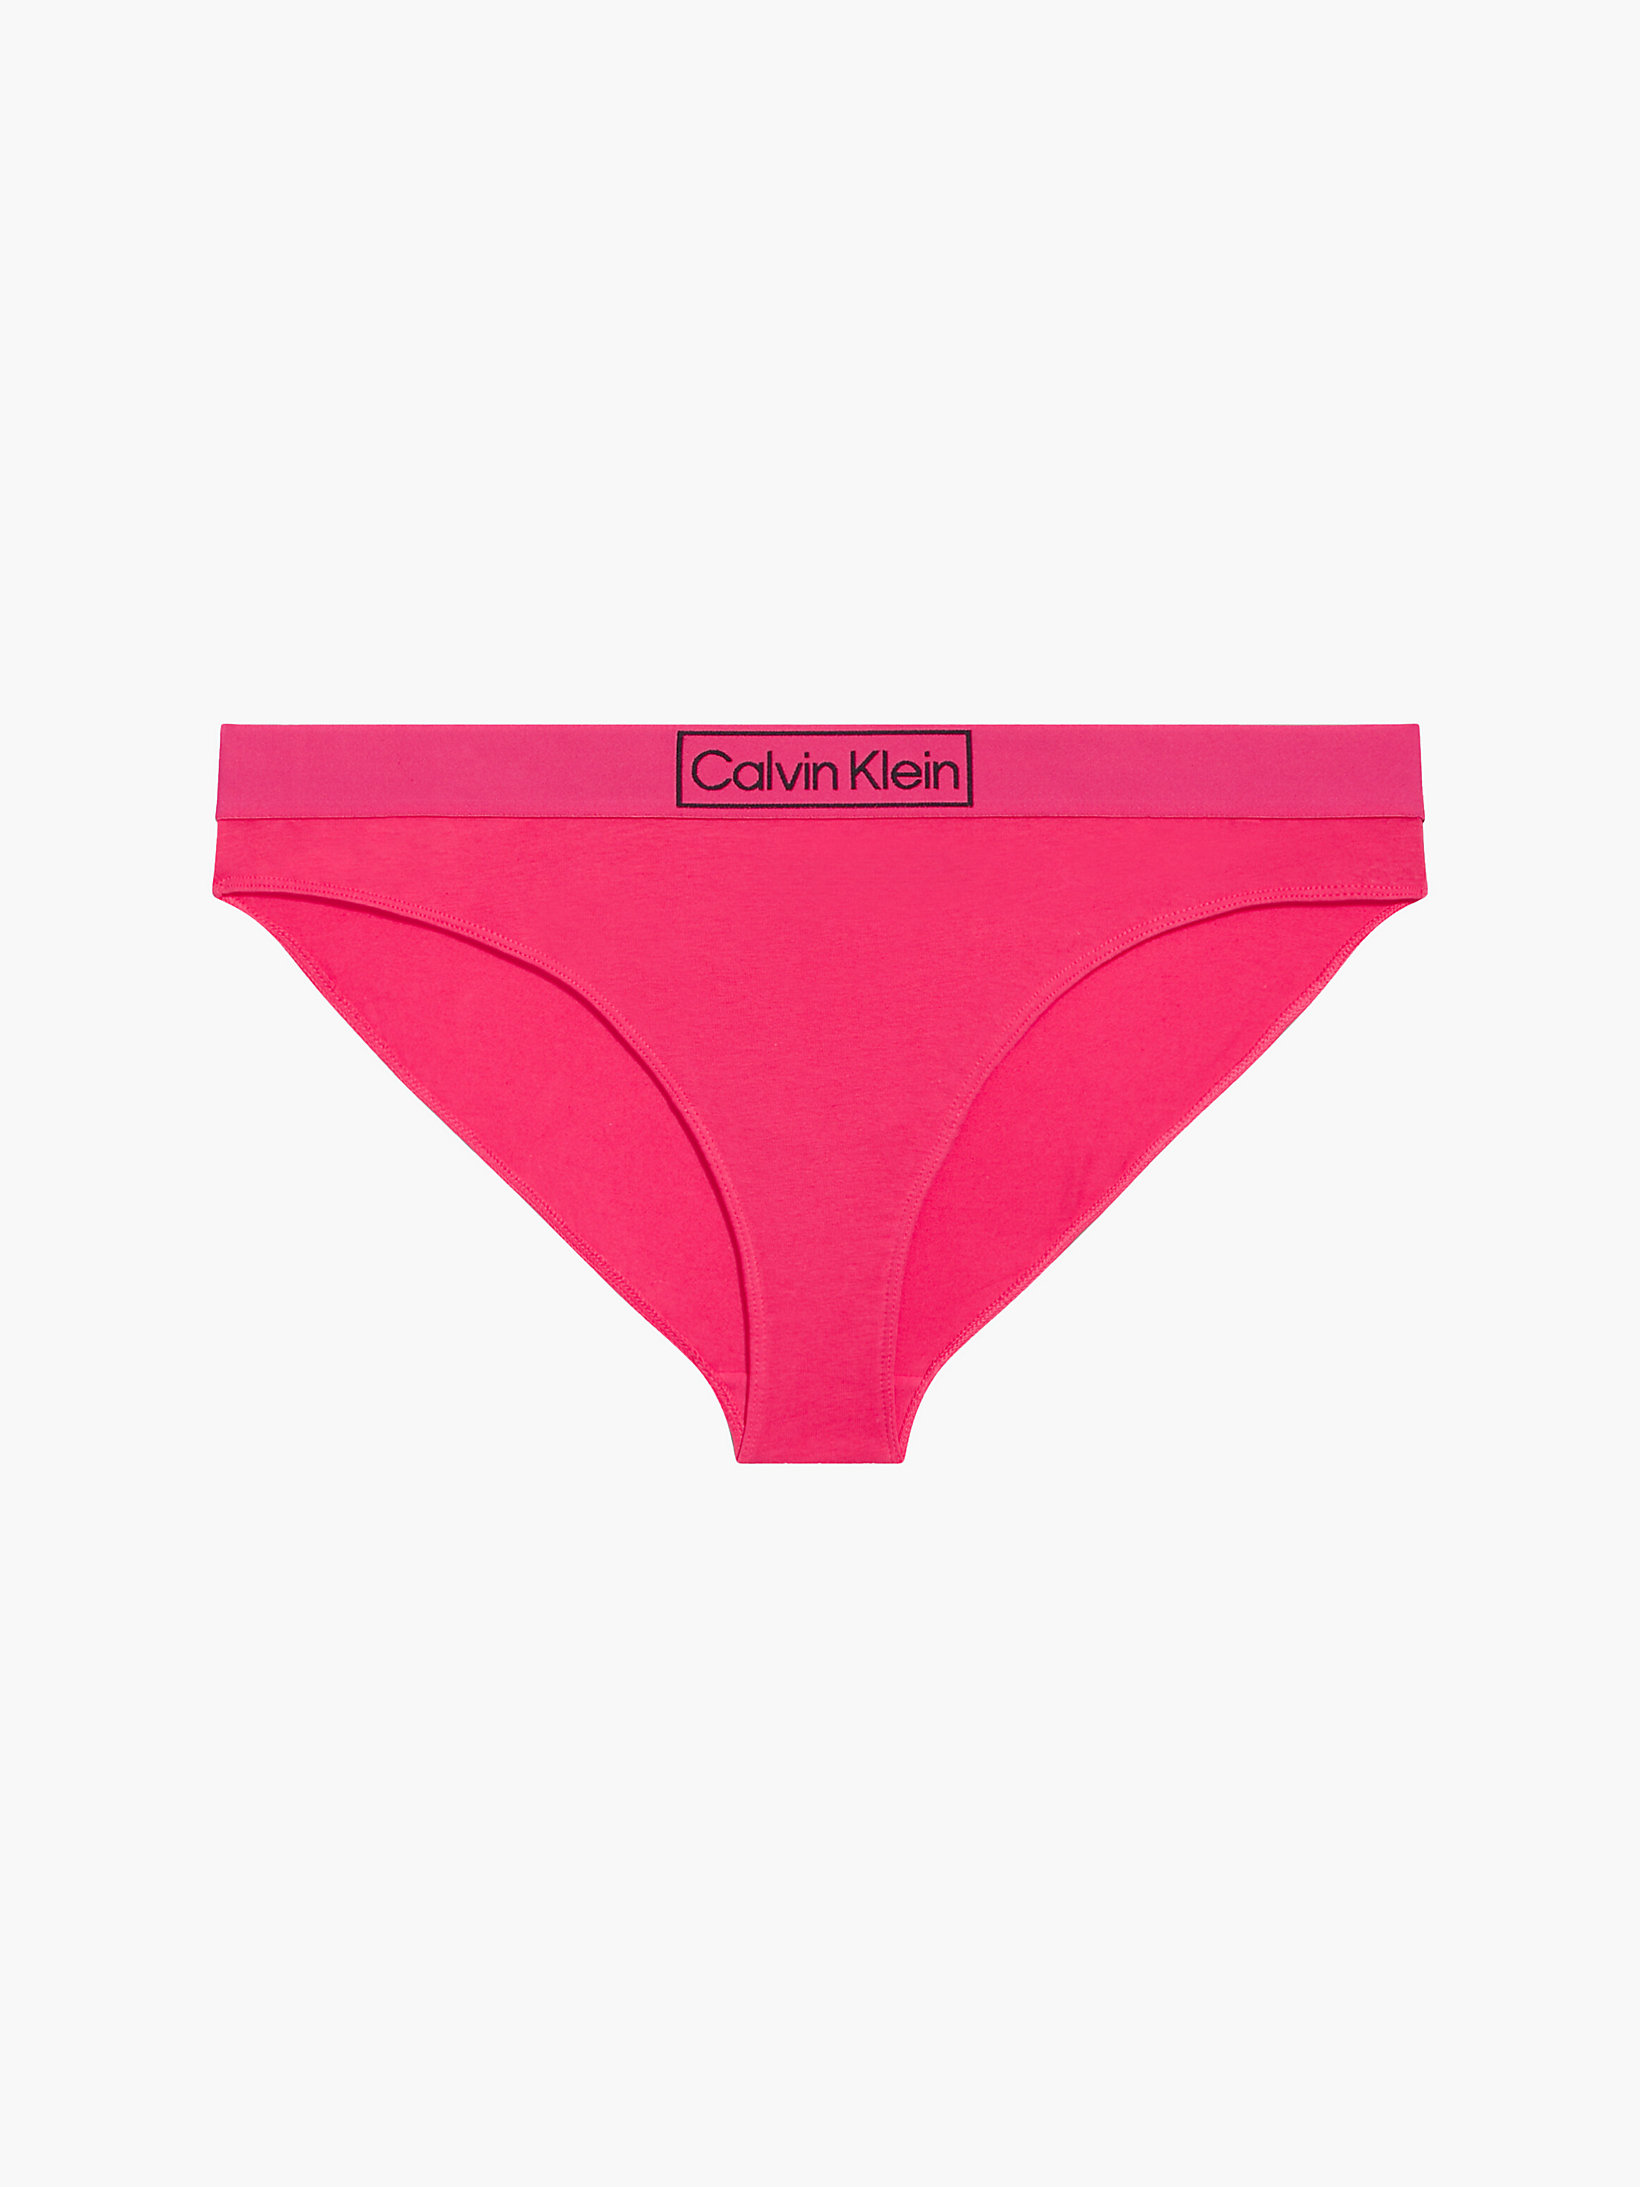 Pink Splendor Plus Size Bikini Brief - Reimagined Heritage undefined women Calvin Klein